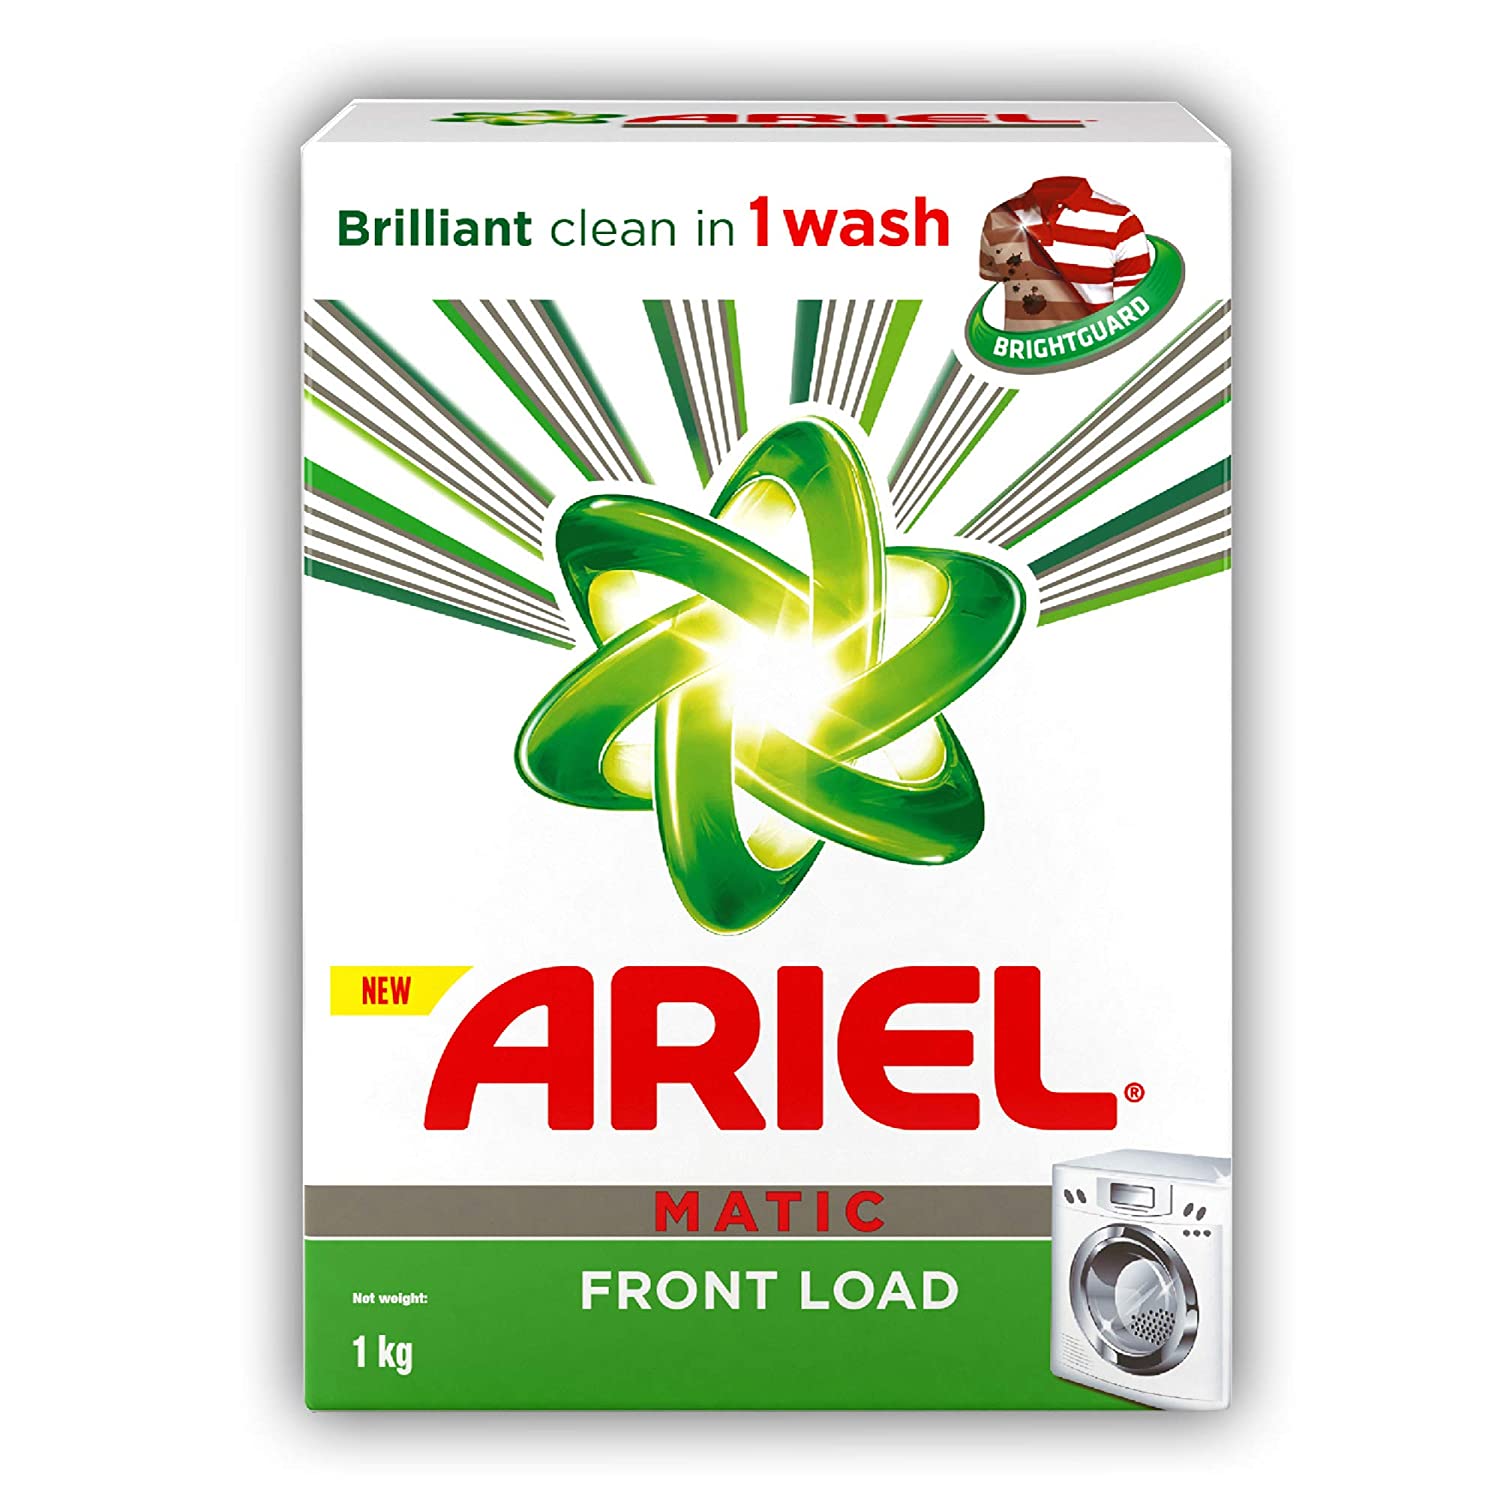 Ariel Matic Front Load Washing Powder 1kg